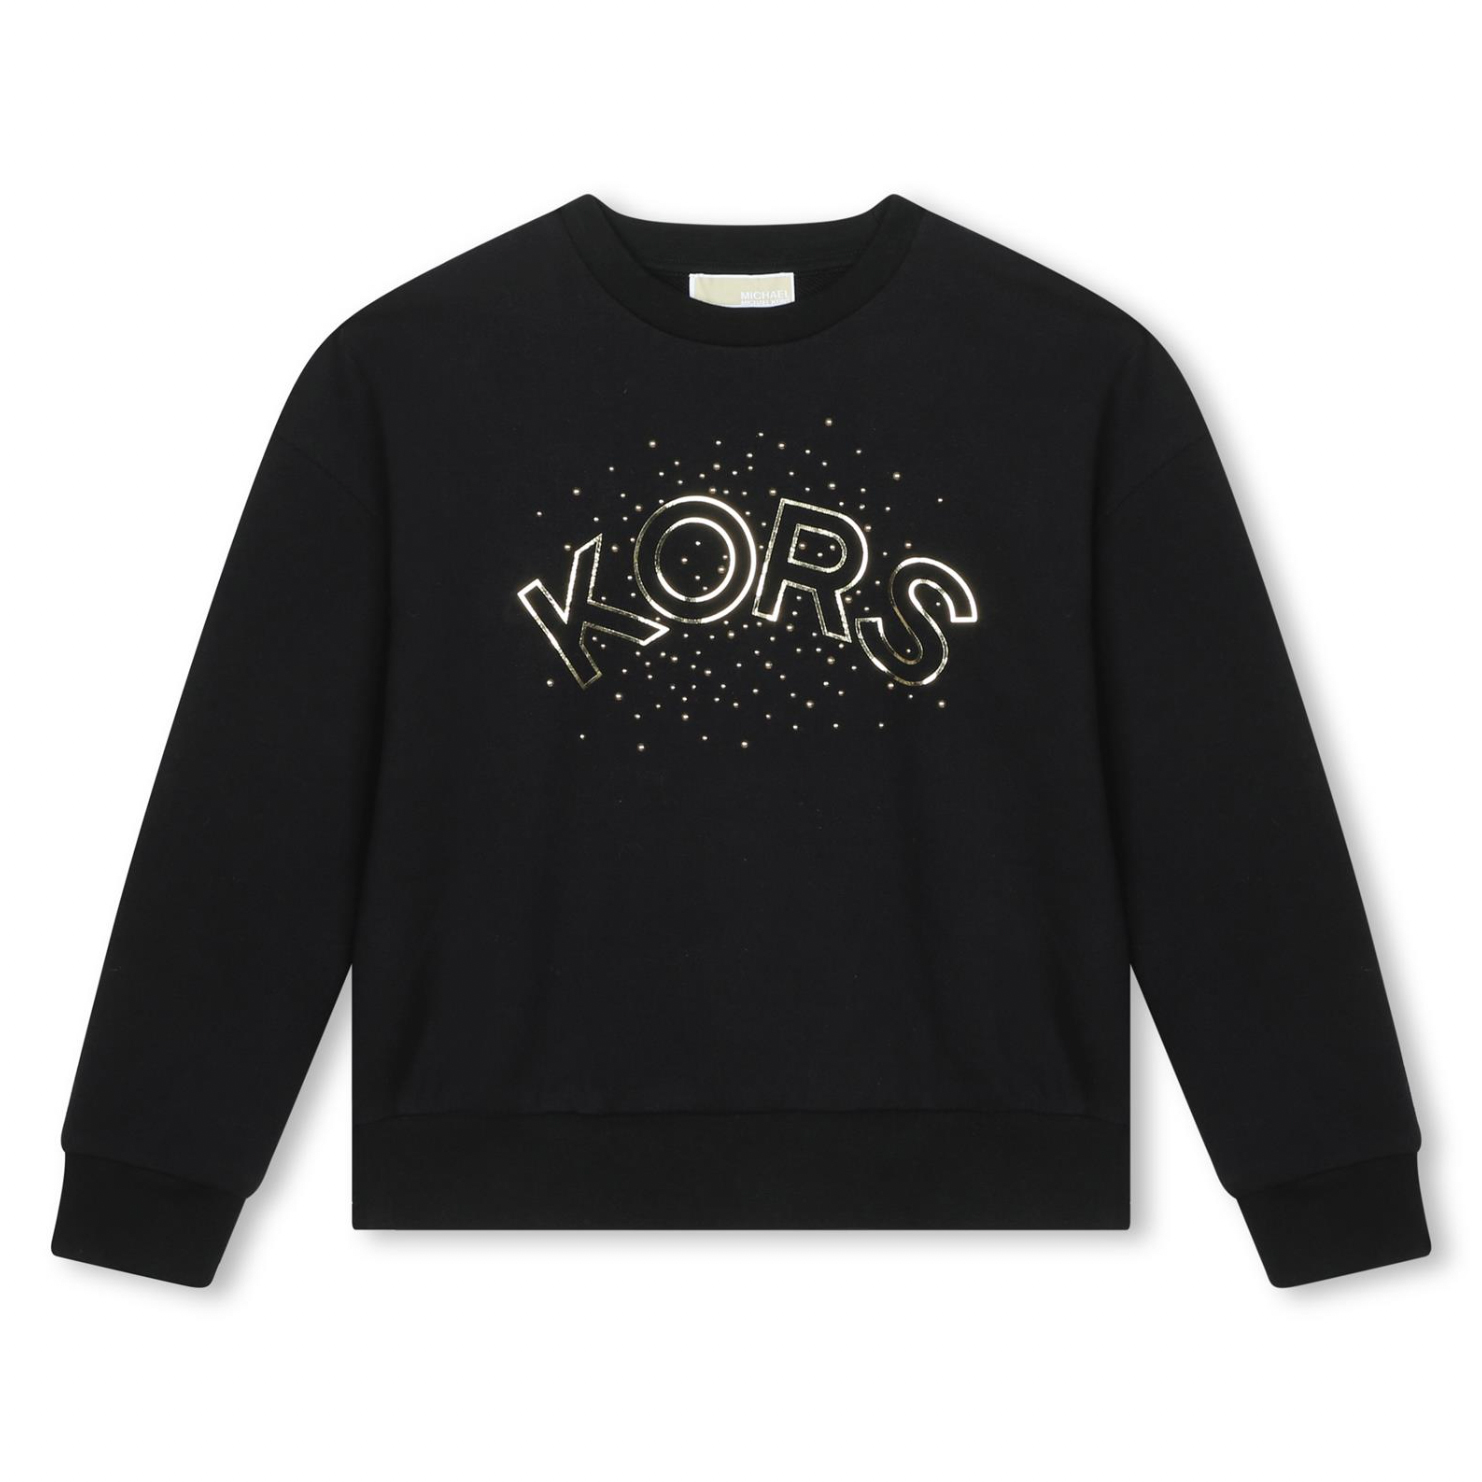 MICHAEL KORS Black & Gold Sweatshirt - Poppydoll